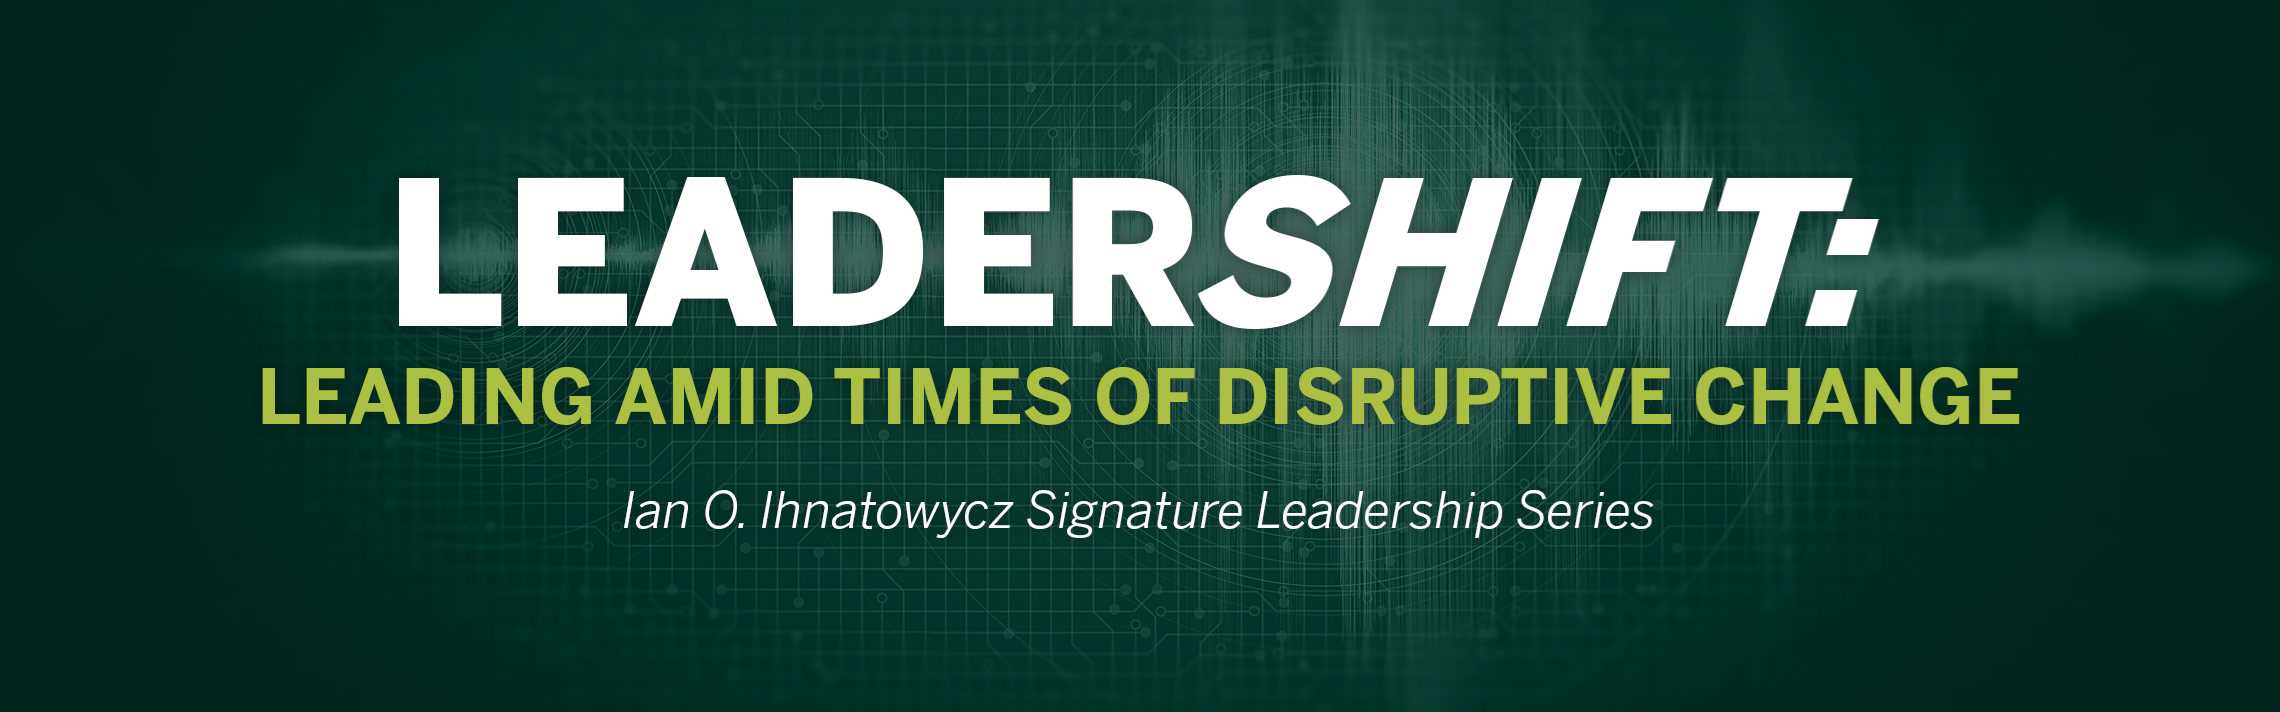 LeaderShift: Leading amid Times of Disruptive Change